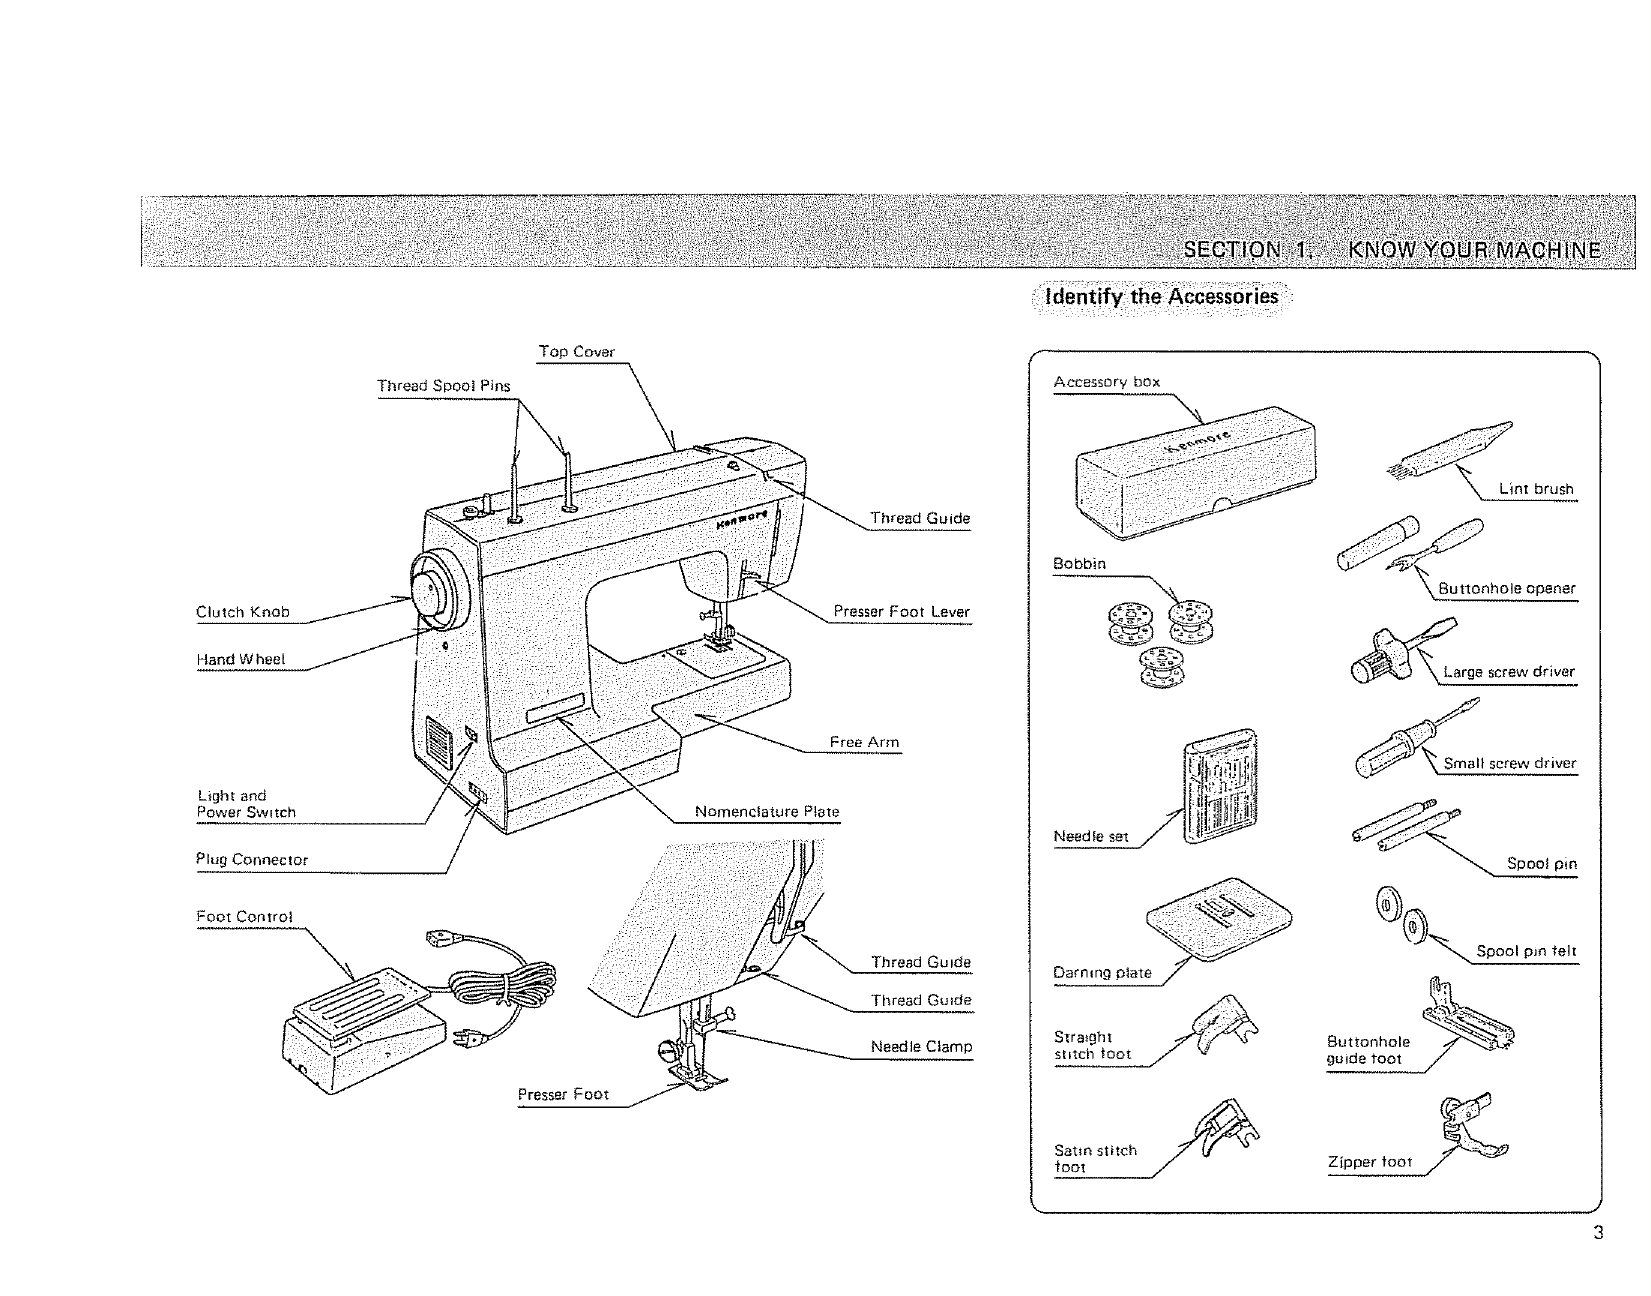 Kenmore 385.1154180, 385.1284180 sewing machine manual Preview image 5